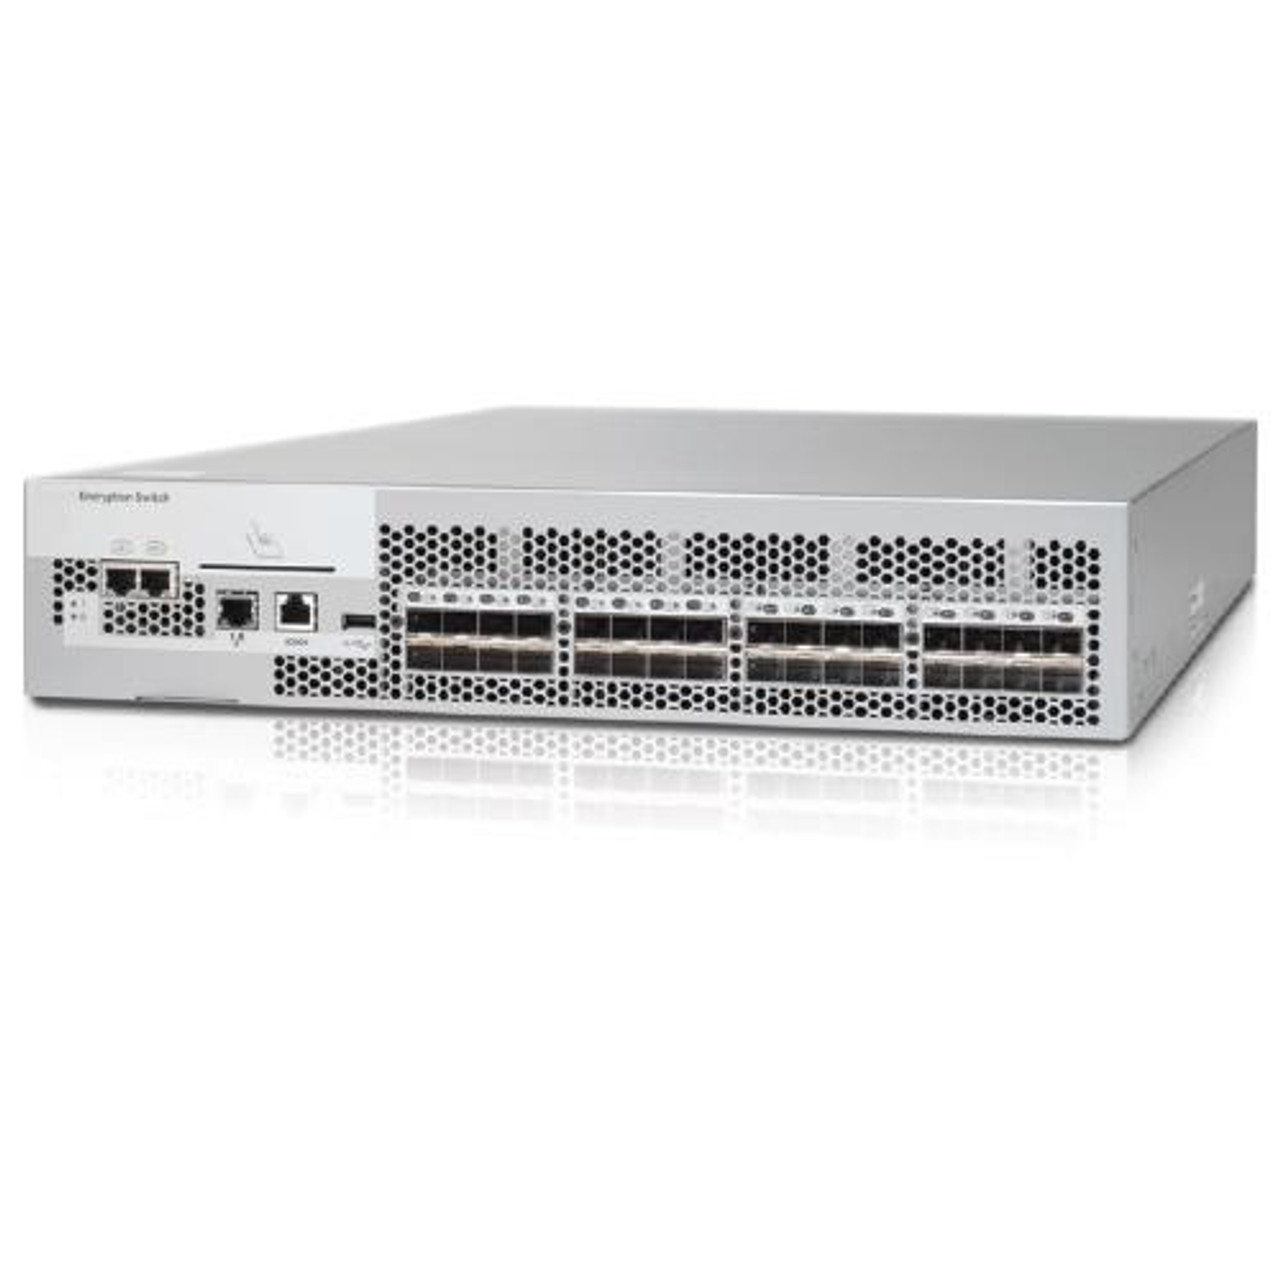 ES-5832B EMC Connectrix 32-Ports RJ-45 Fibre Channel Switch Rack-mountable 2U (Refurbished)